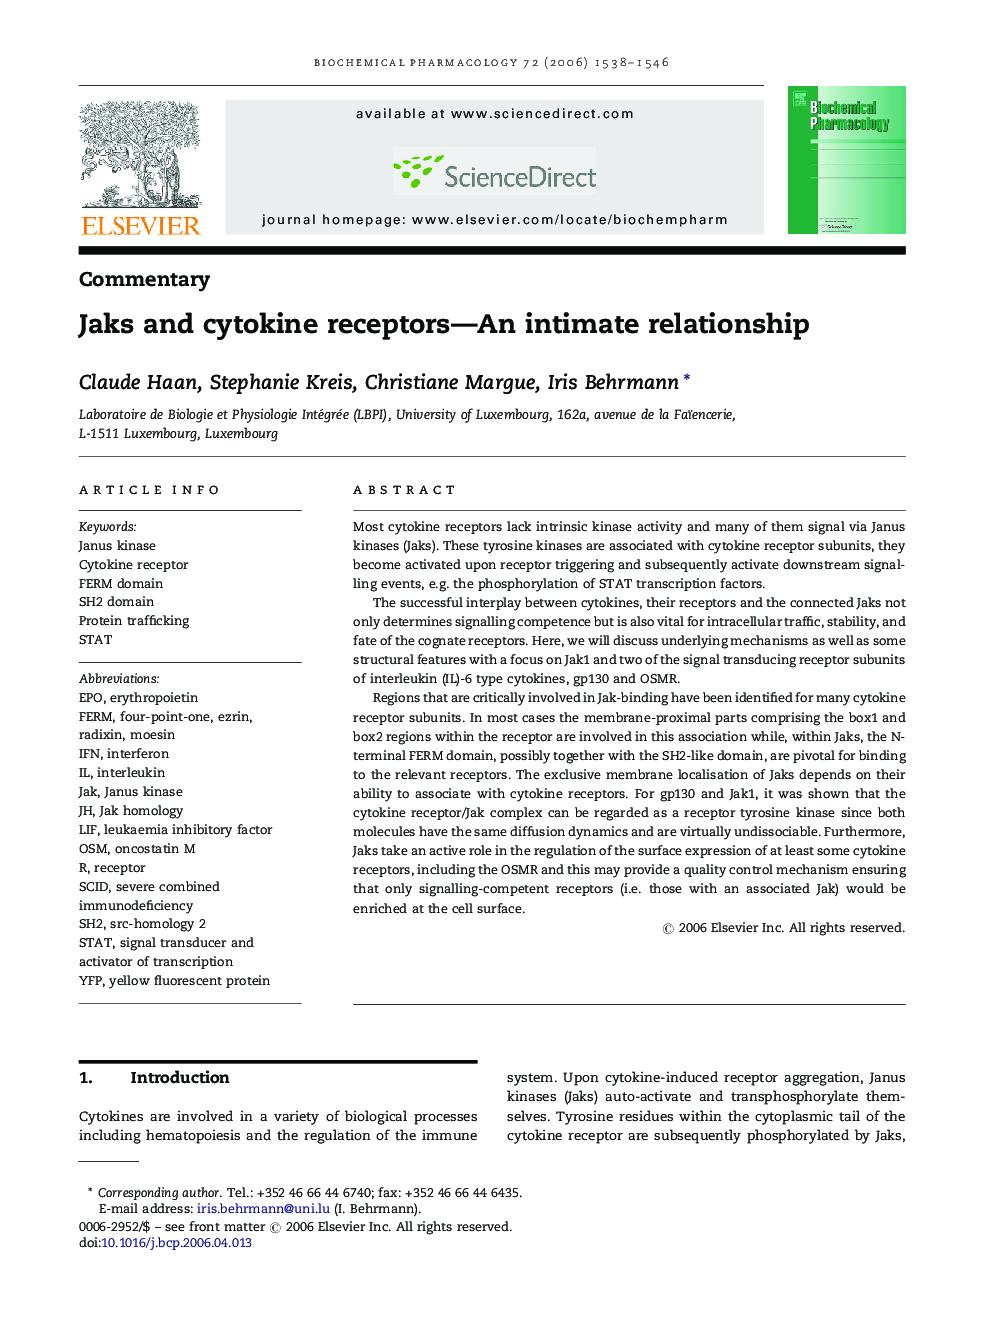 Jaks and cytokine receptors—An intimate relationship